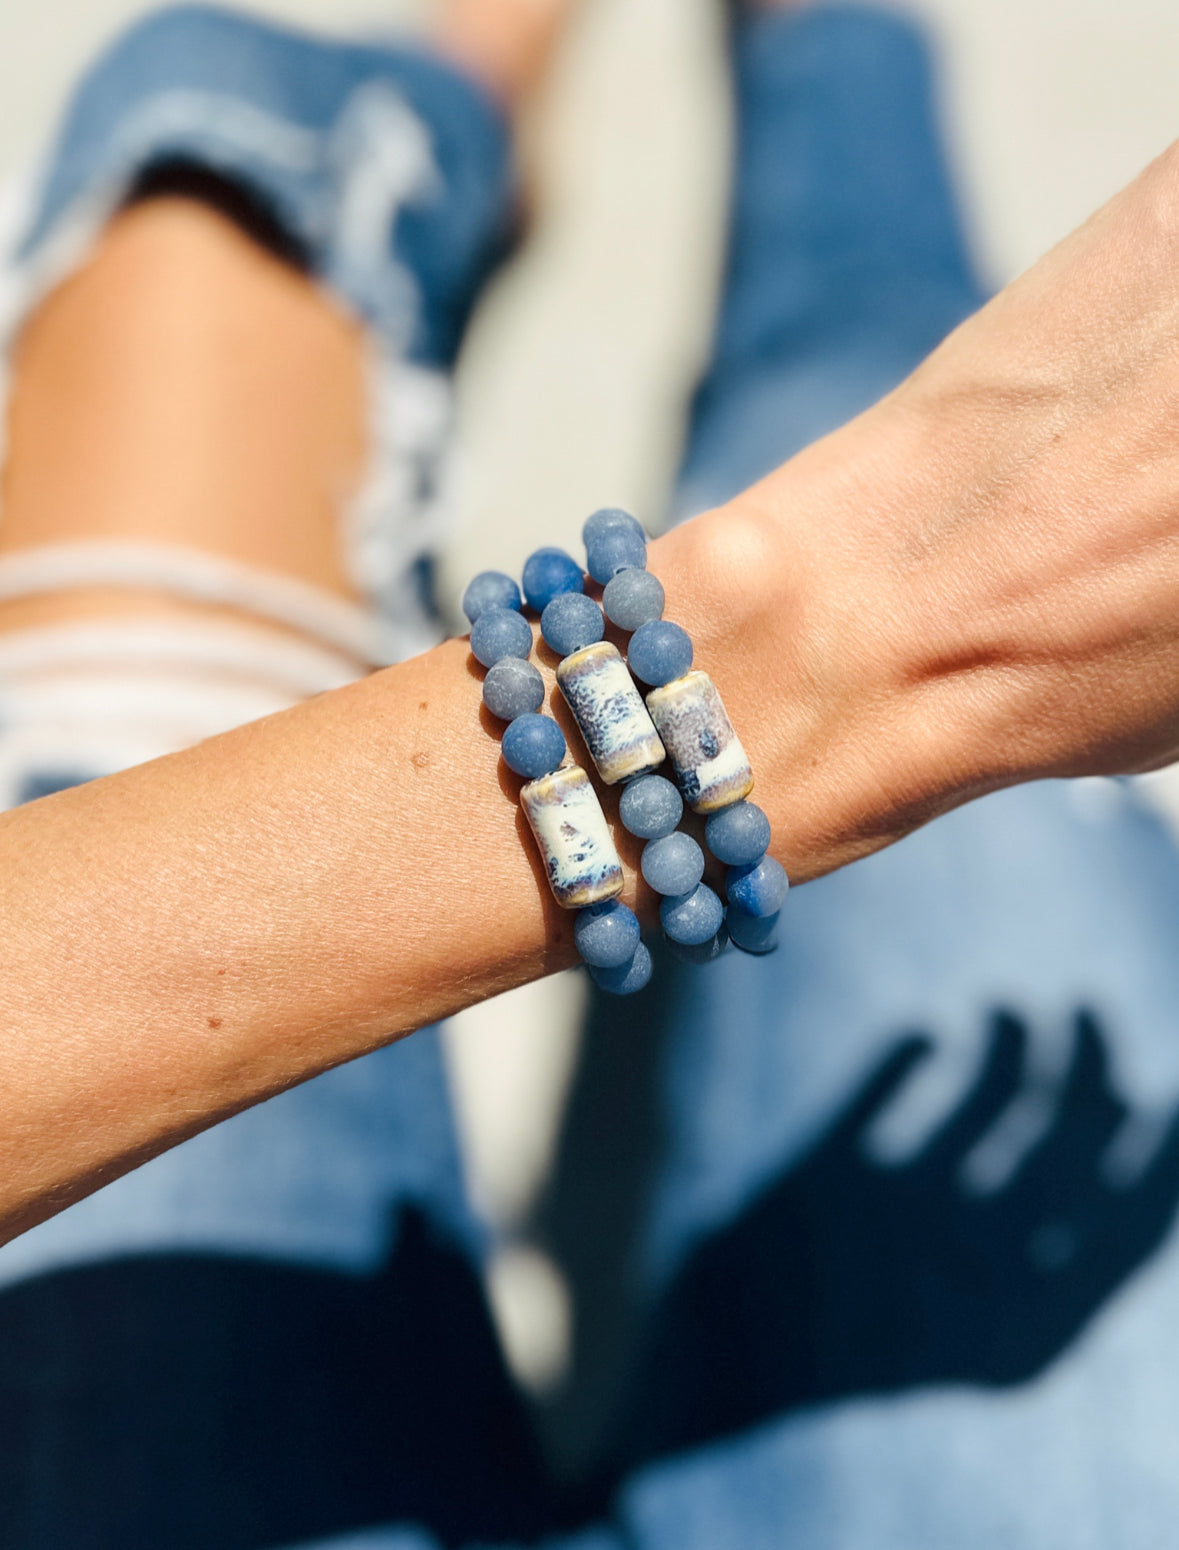 Blue Aventurine Bracelet with a ceramic Focal bead